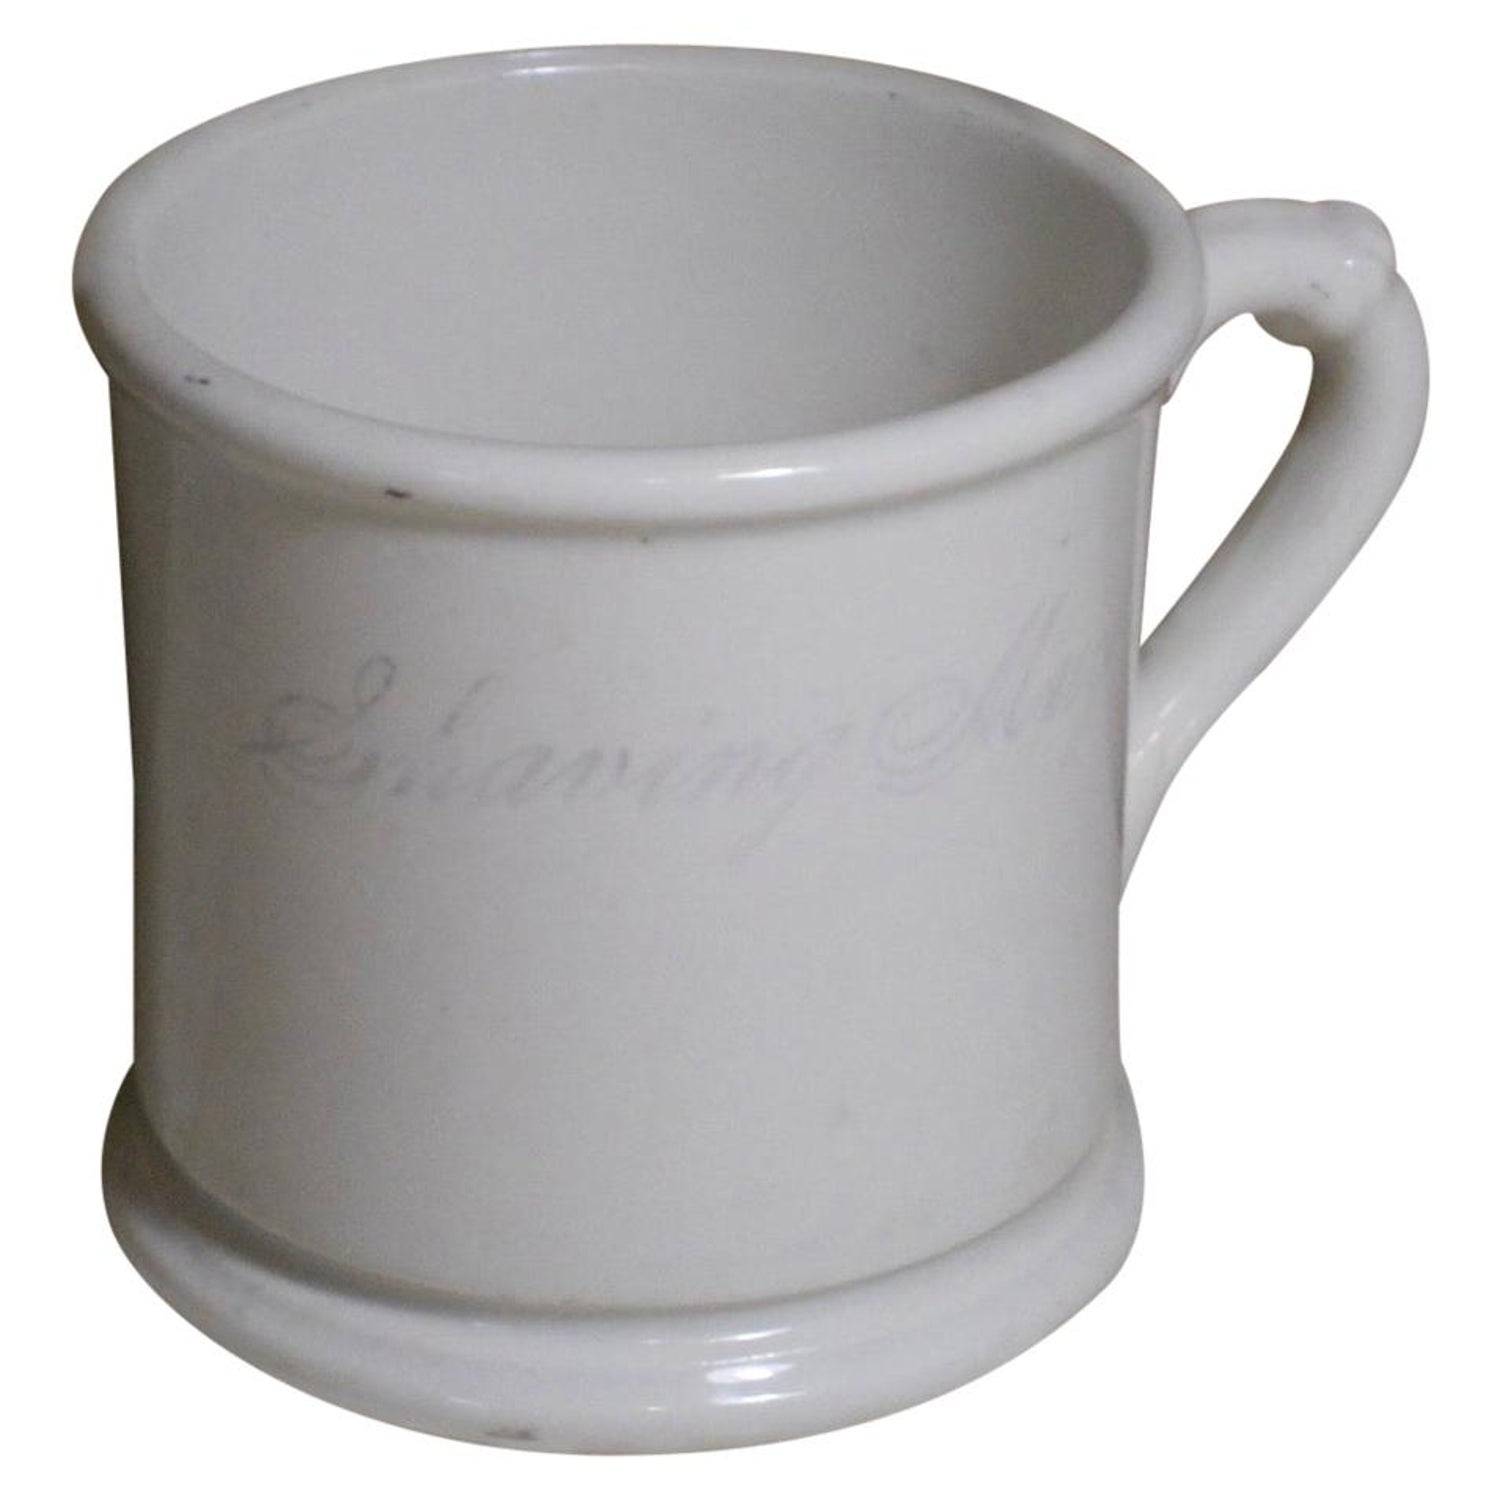 Collectible Mugs Vintage - 3 For Sale on 1stDibs